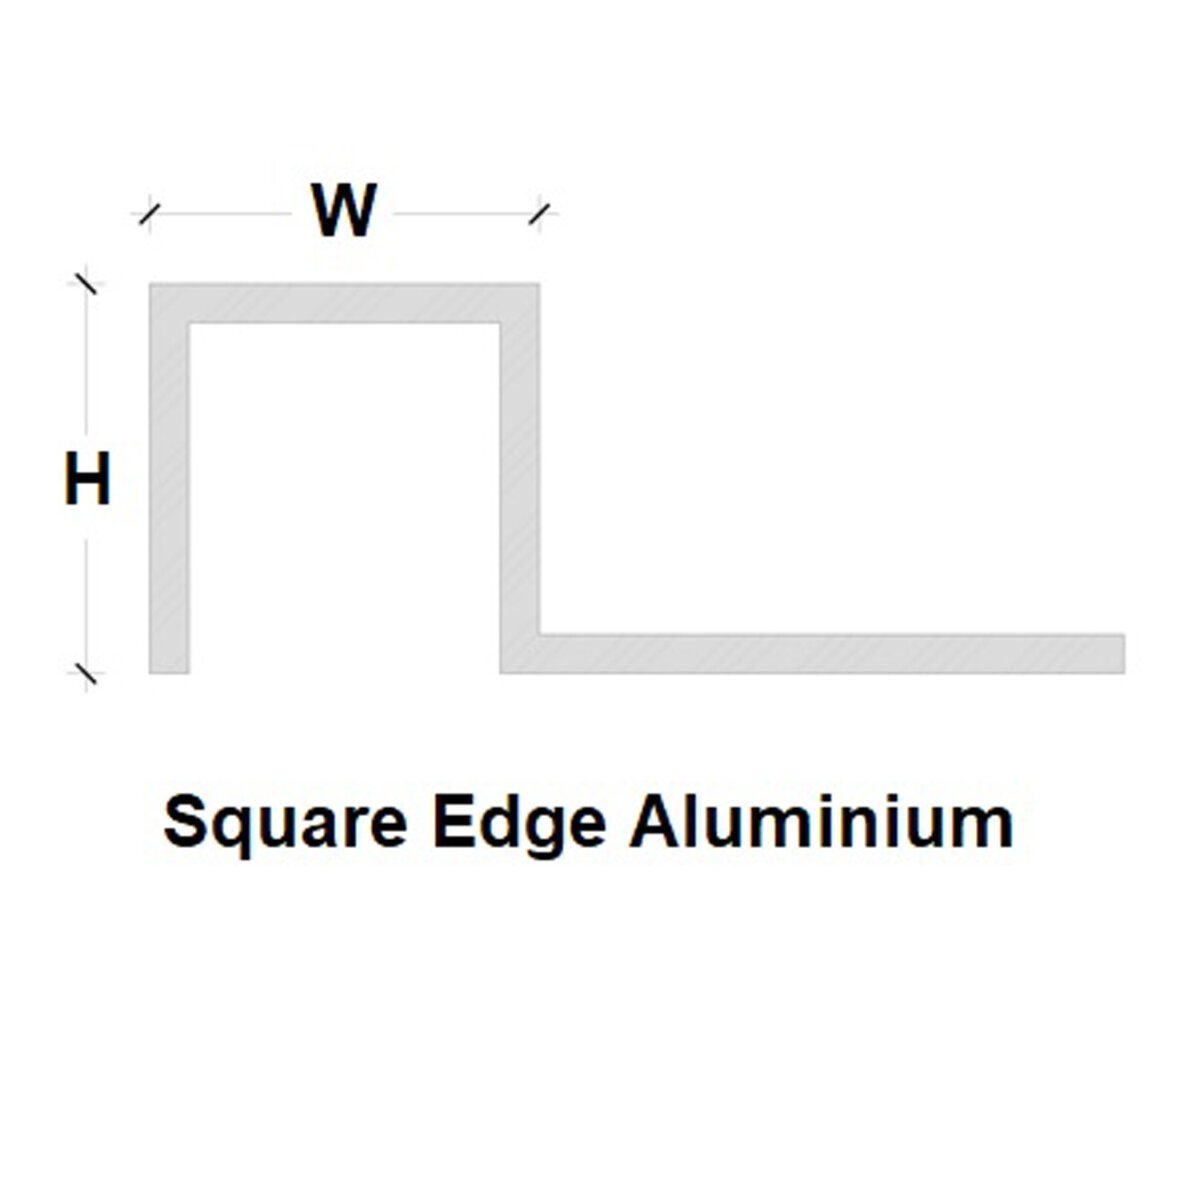 7_Sure Strip Square Edge Aluminium 10mm_Stiles_TechDrawing_Image